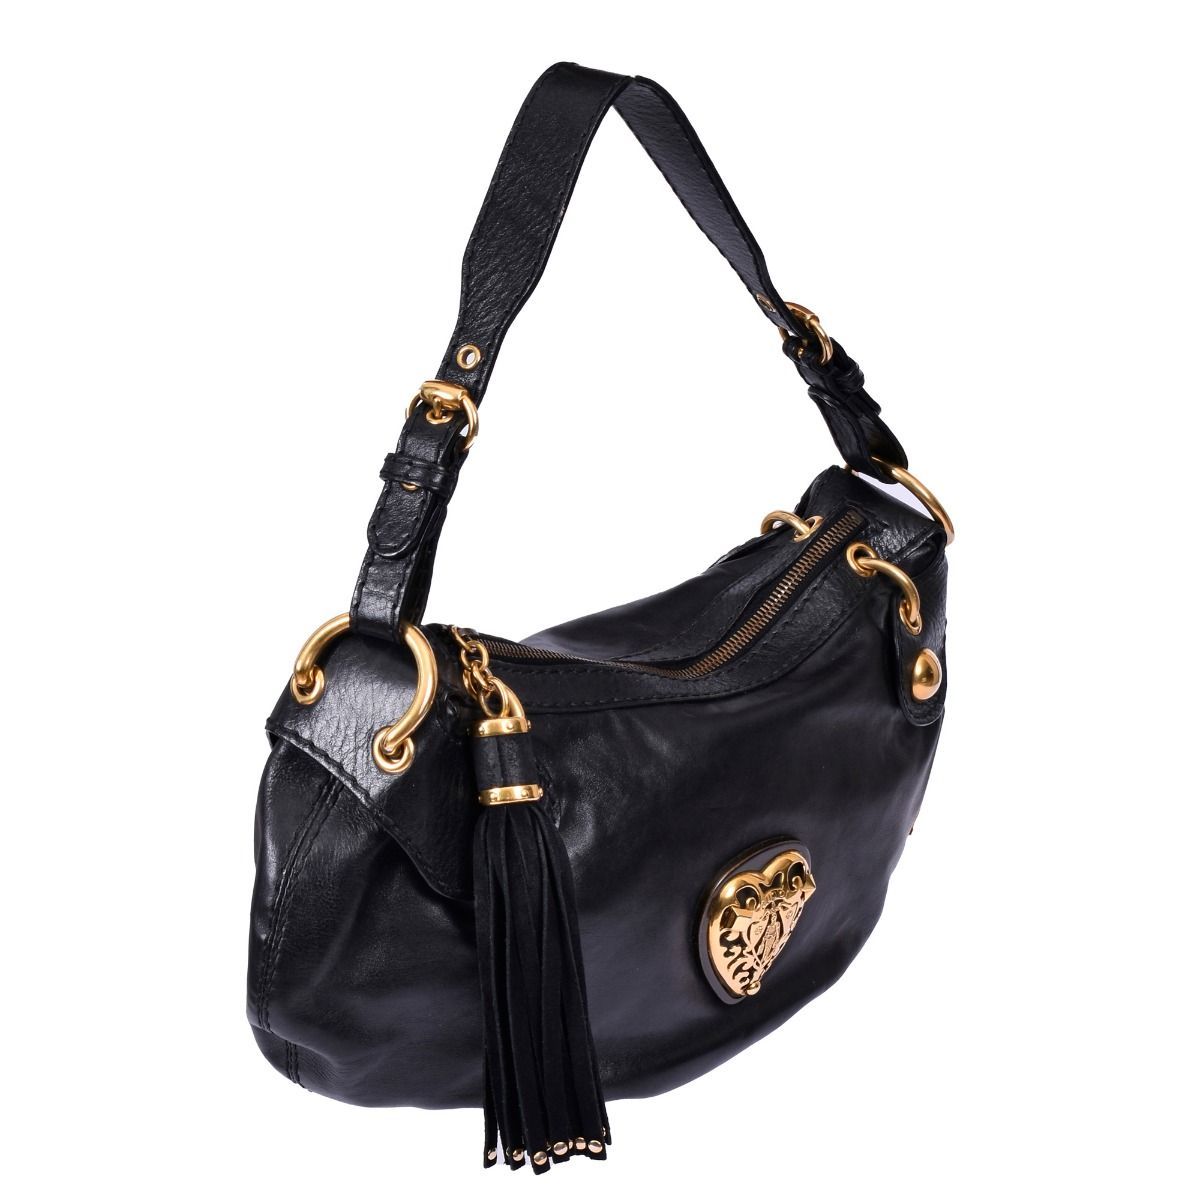 Gucci Hysteria Leather Shoulder Bag